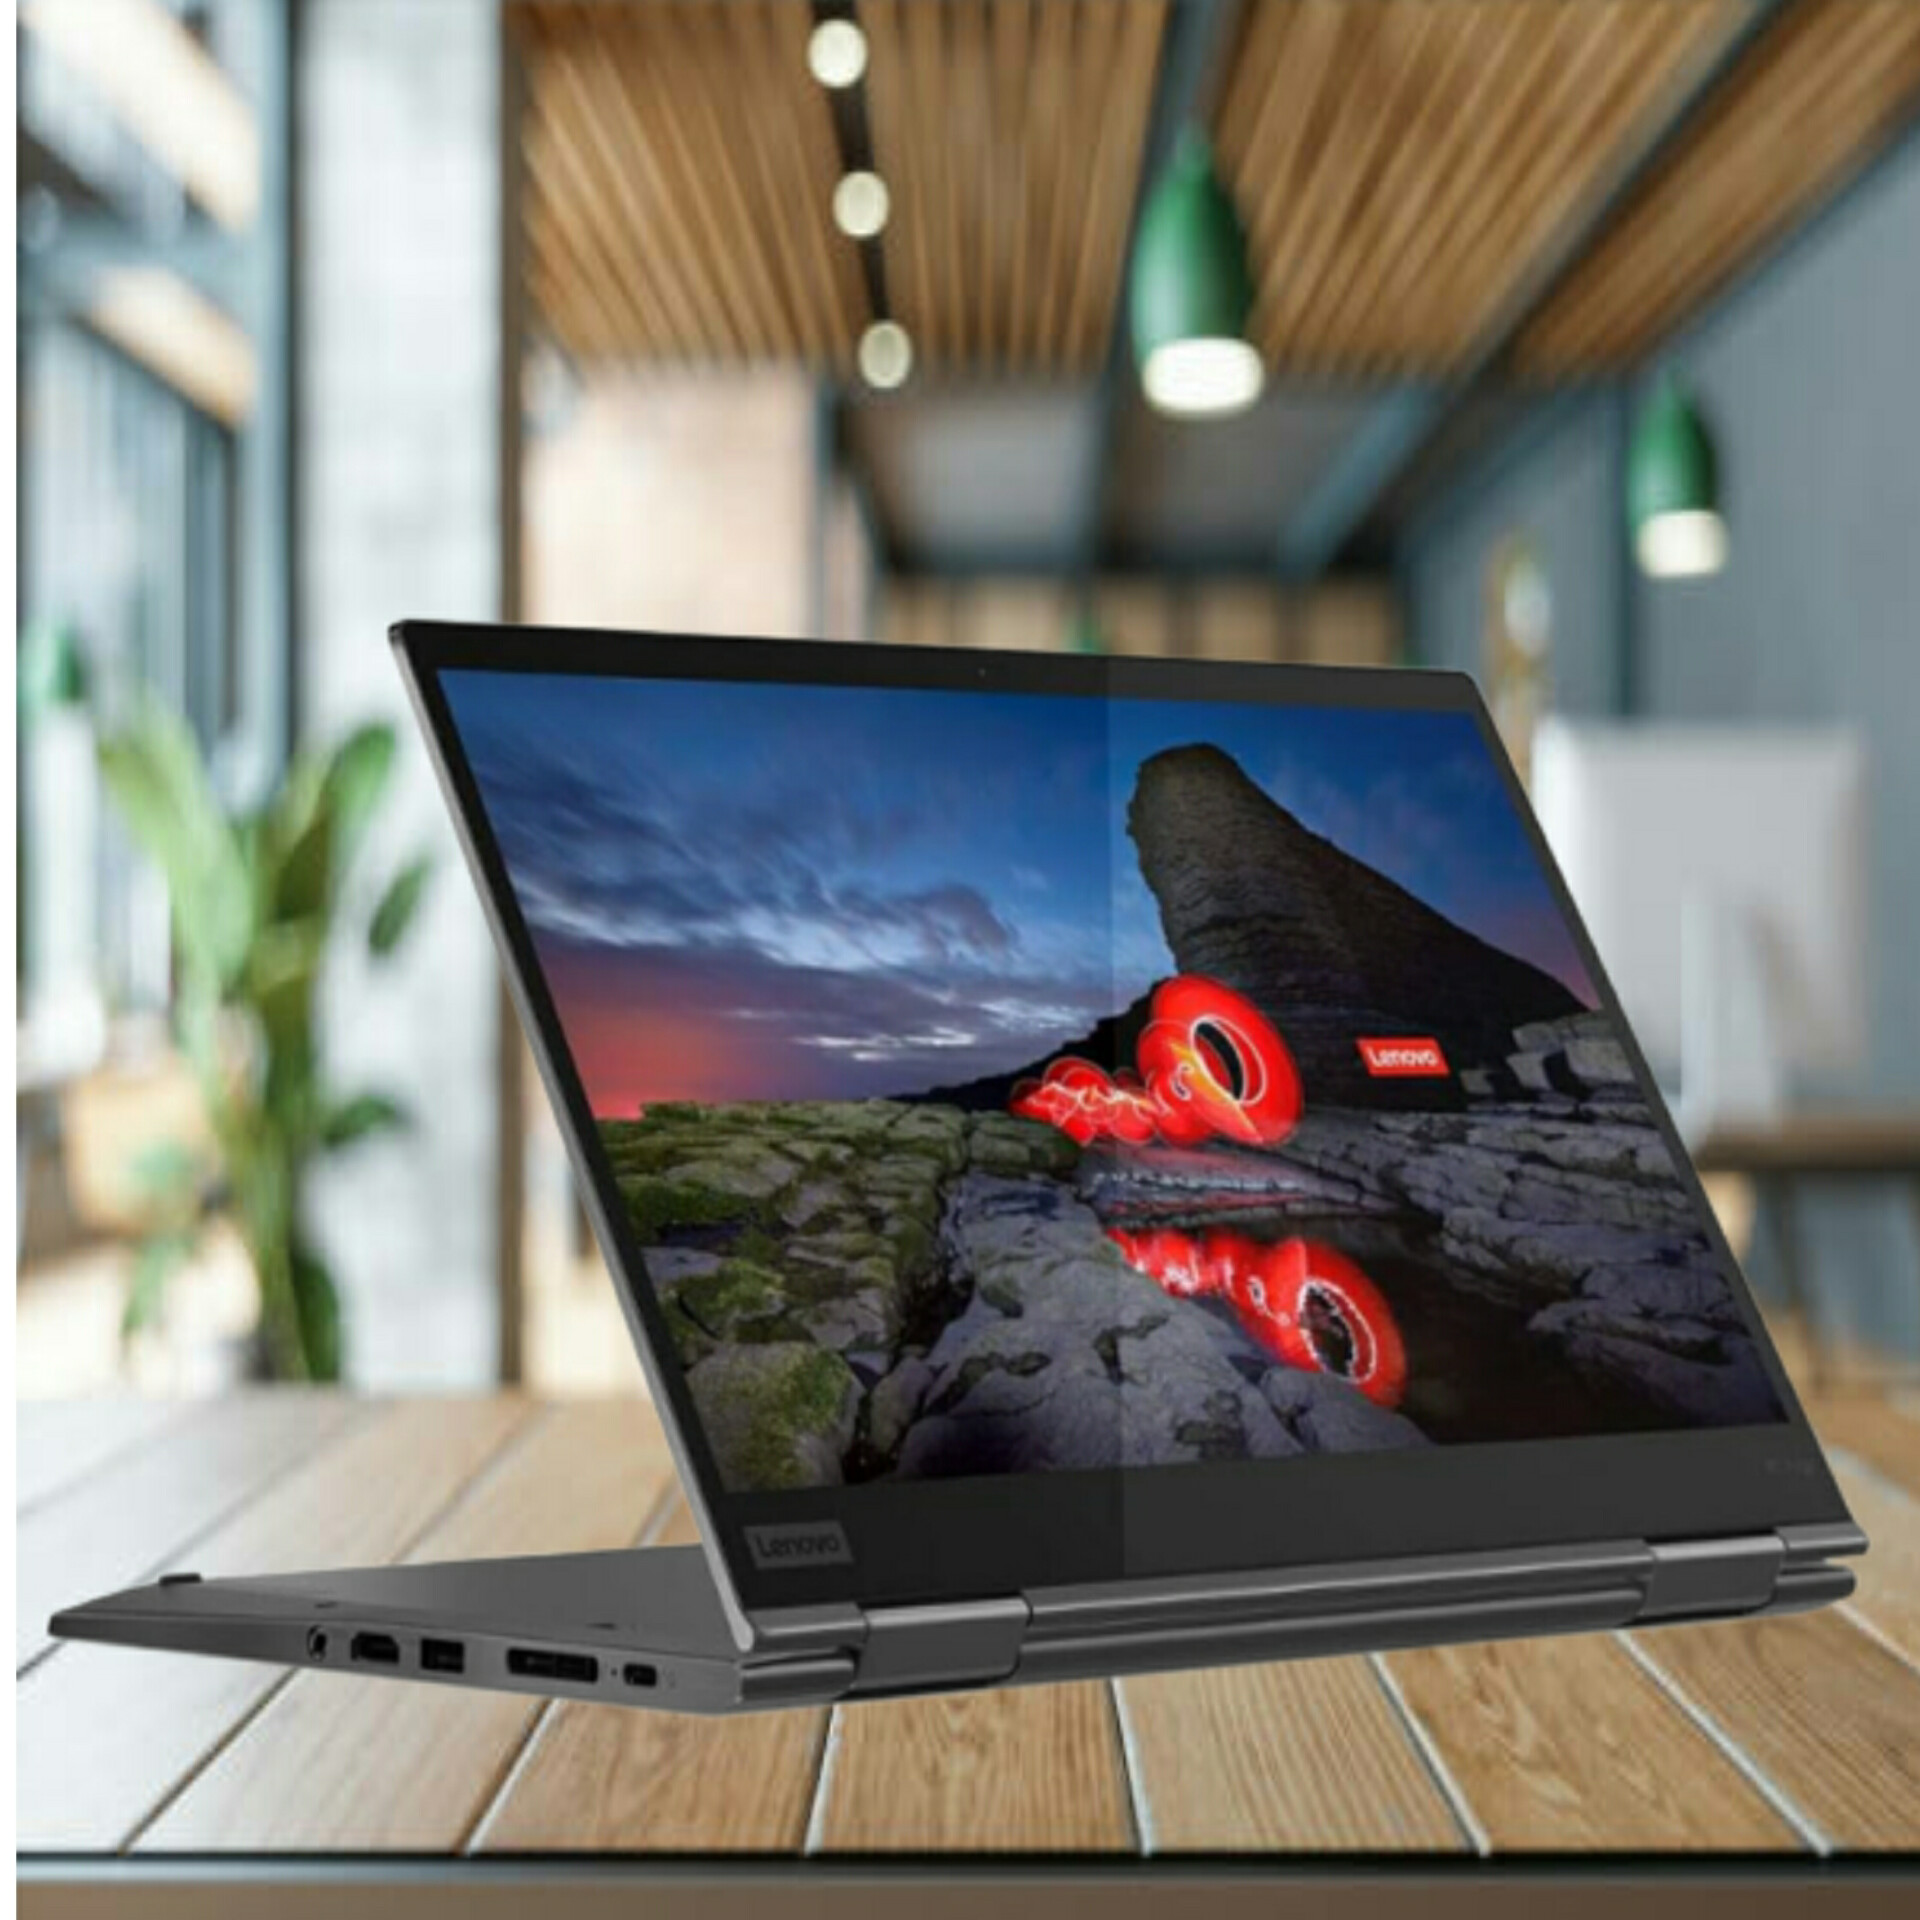 Lenovo ThinkPad Yoga 370 Laptop Price in Pakistan